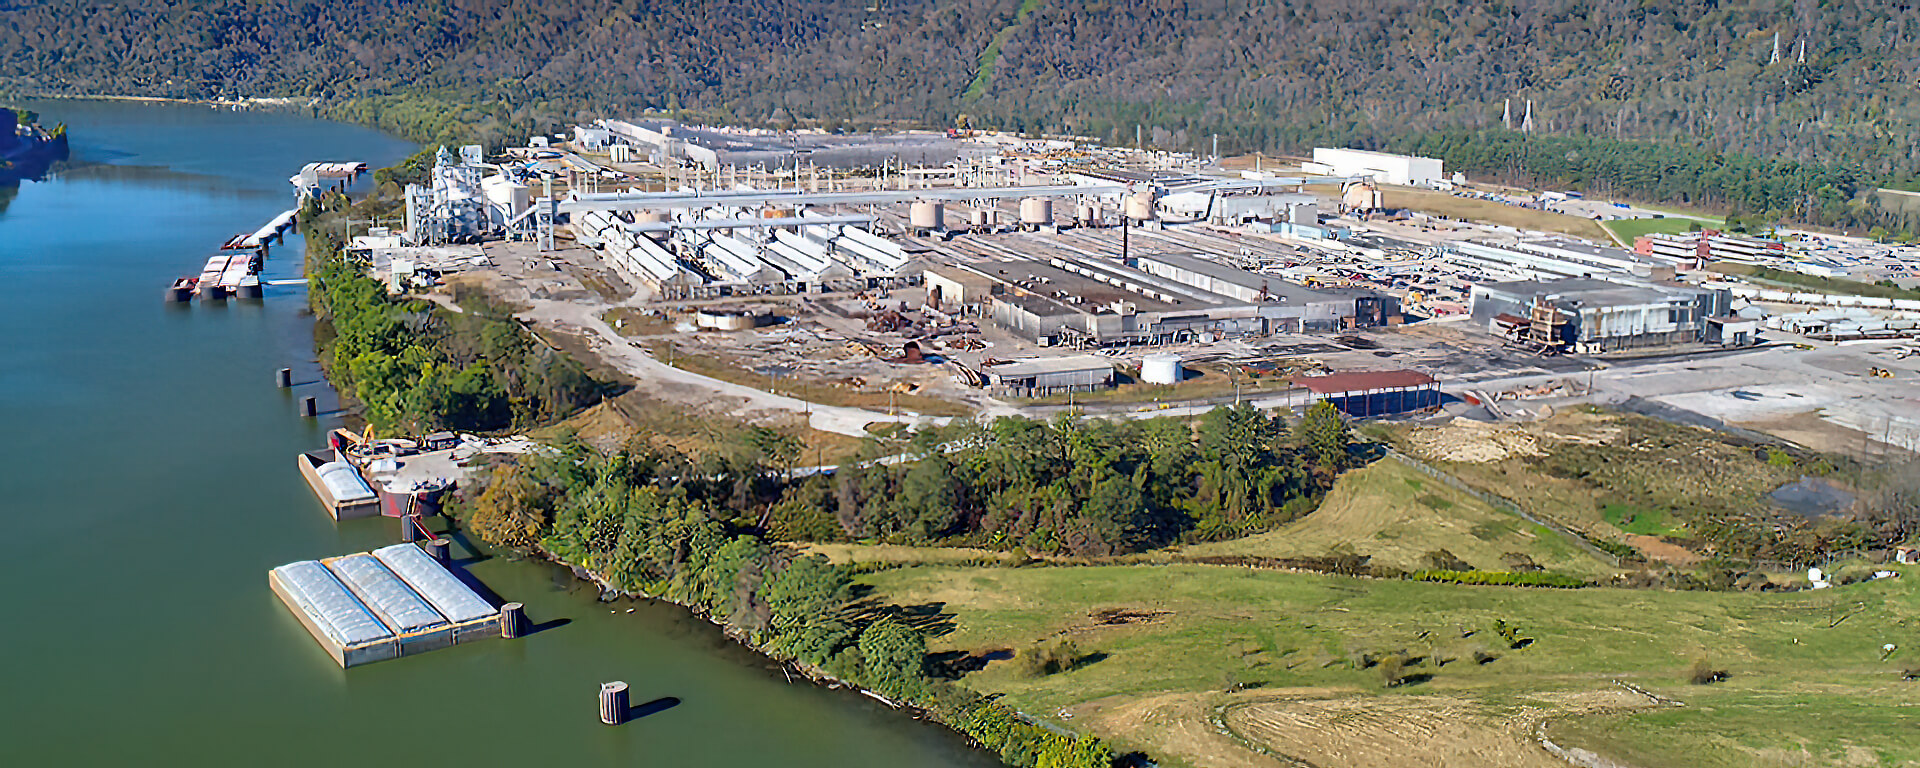 Hannibal Power Plant Carbon Capture, Transportation and Sequestration